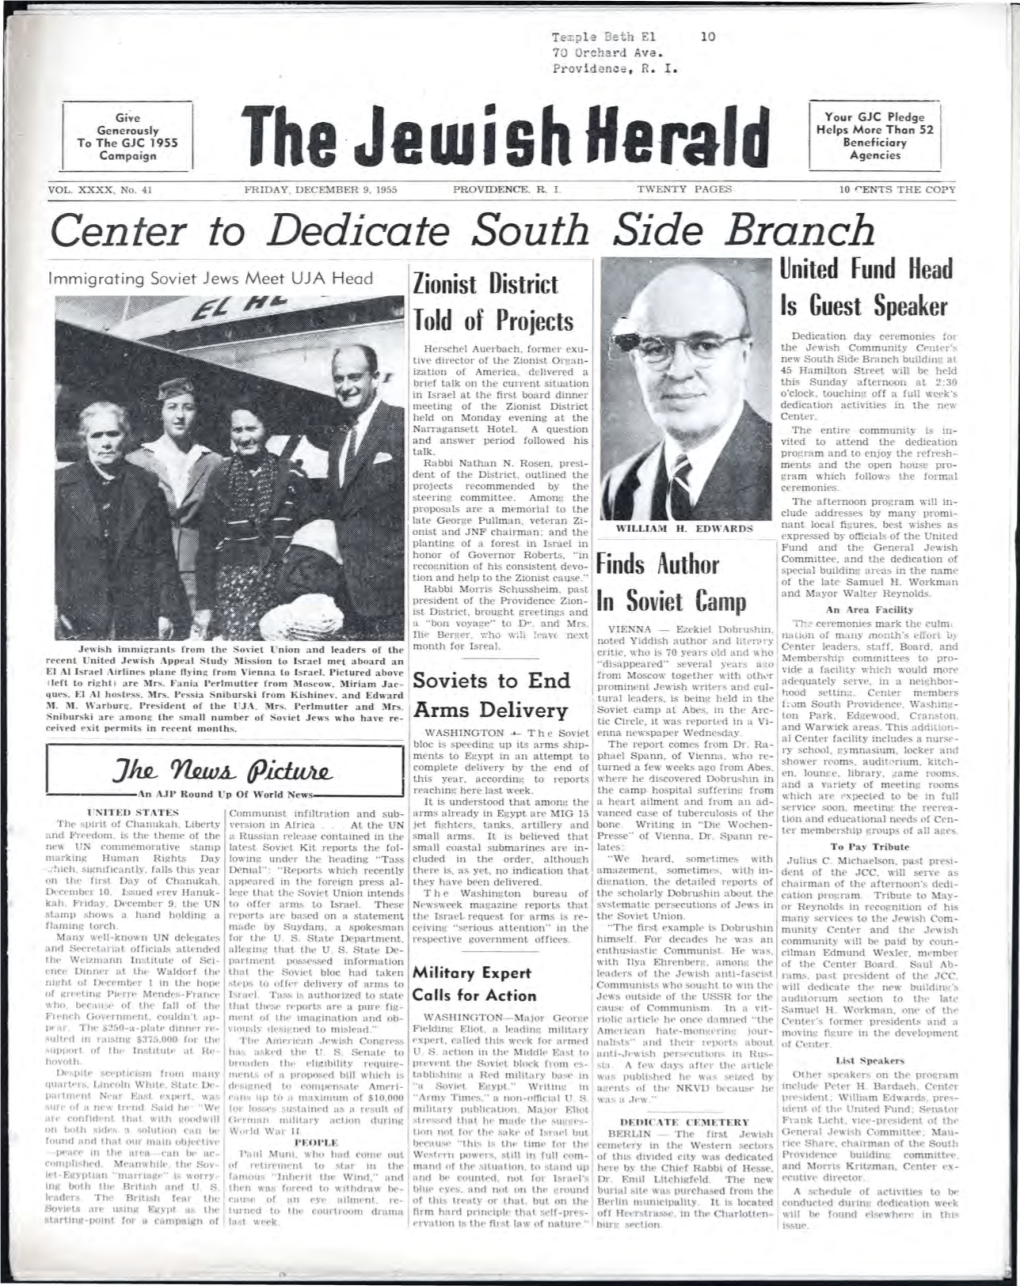 The Jewish Herald Agencies VOL